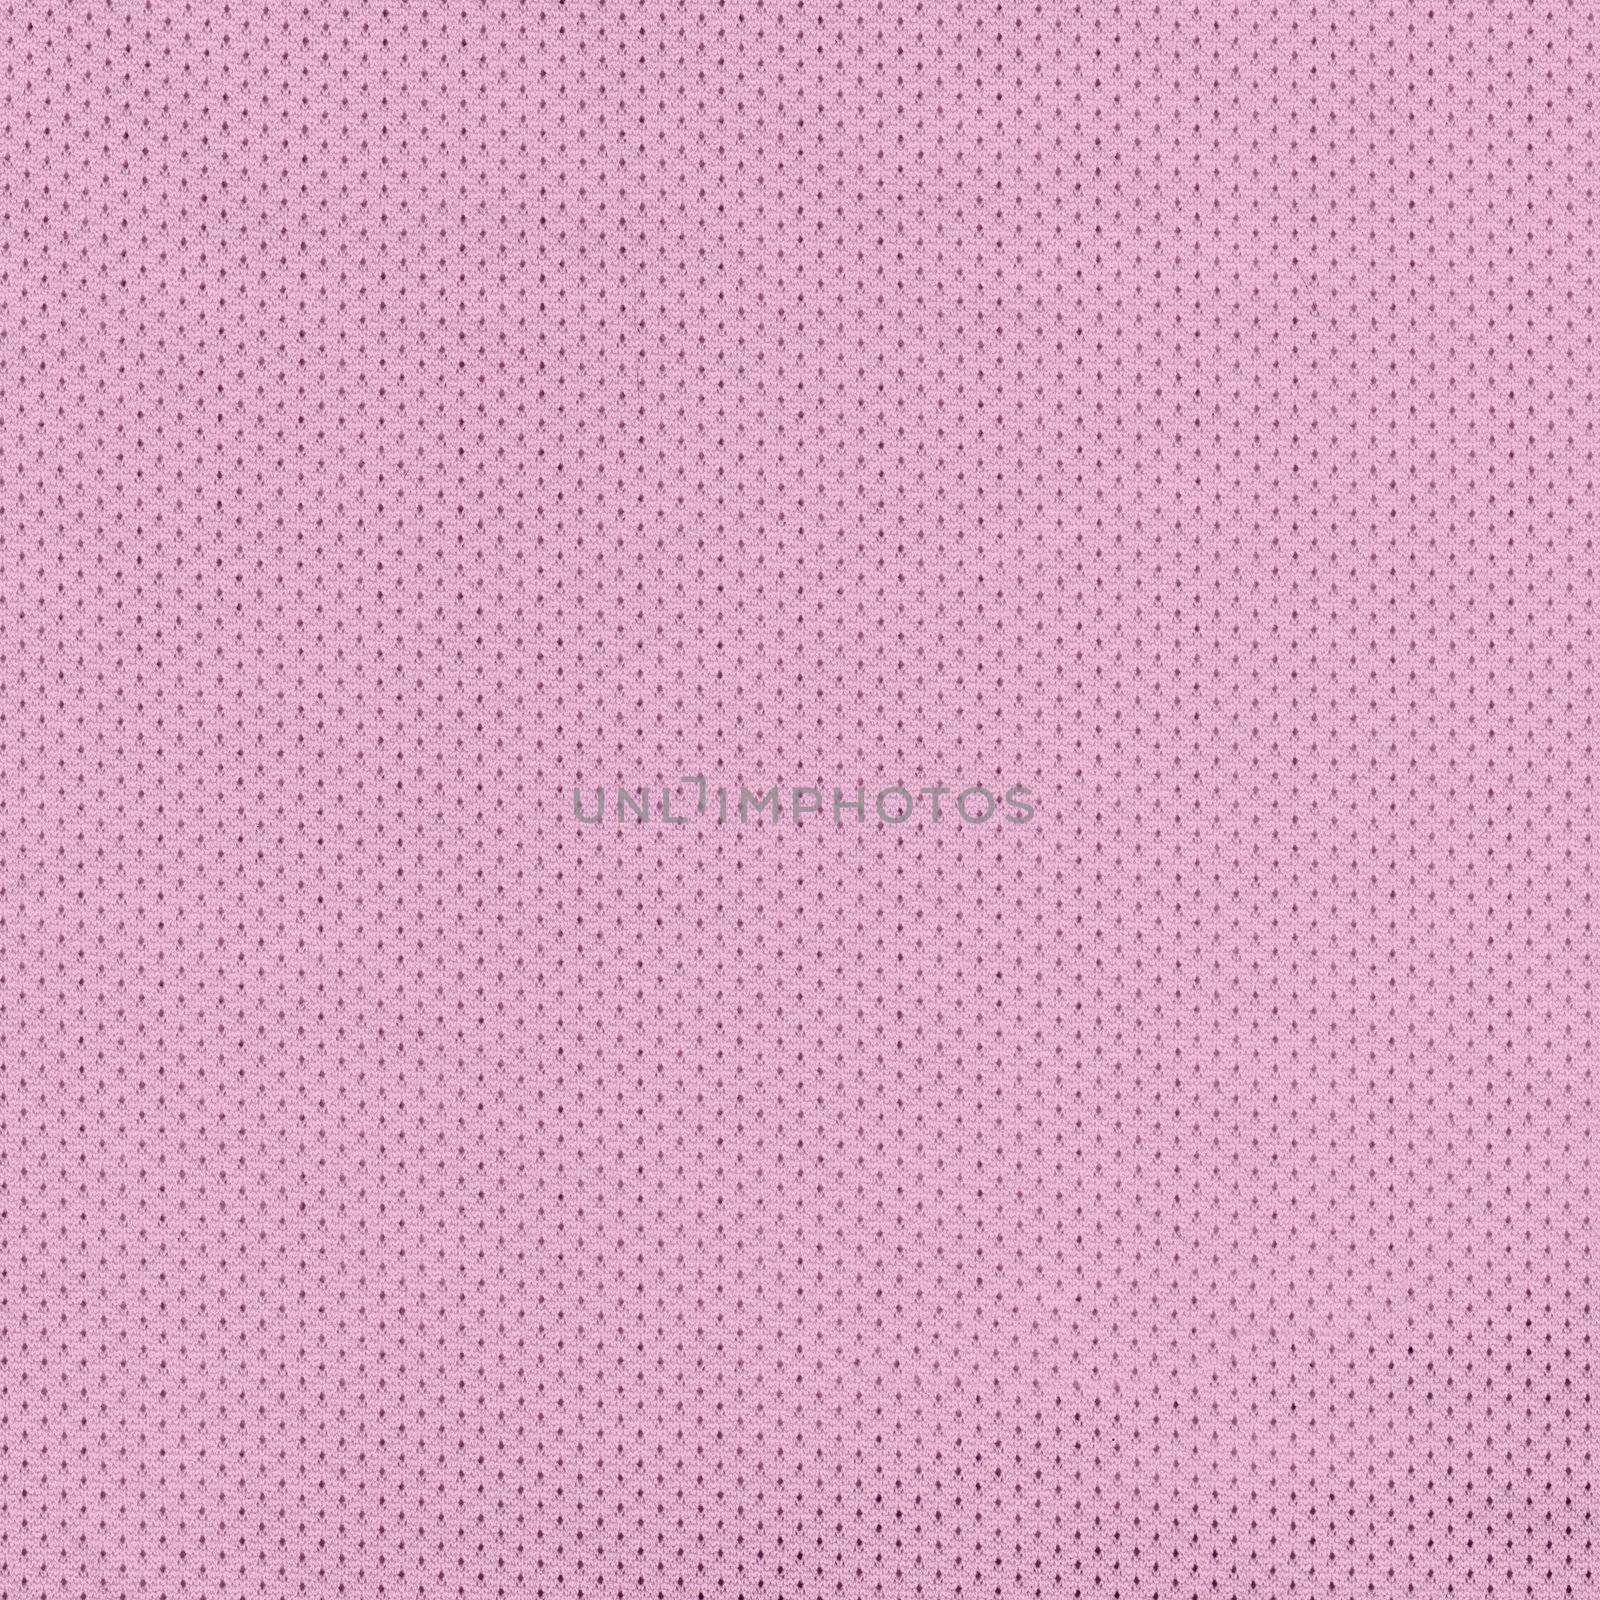 Closeup on a Pink Sport Jersey Mesh Textile